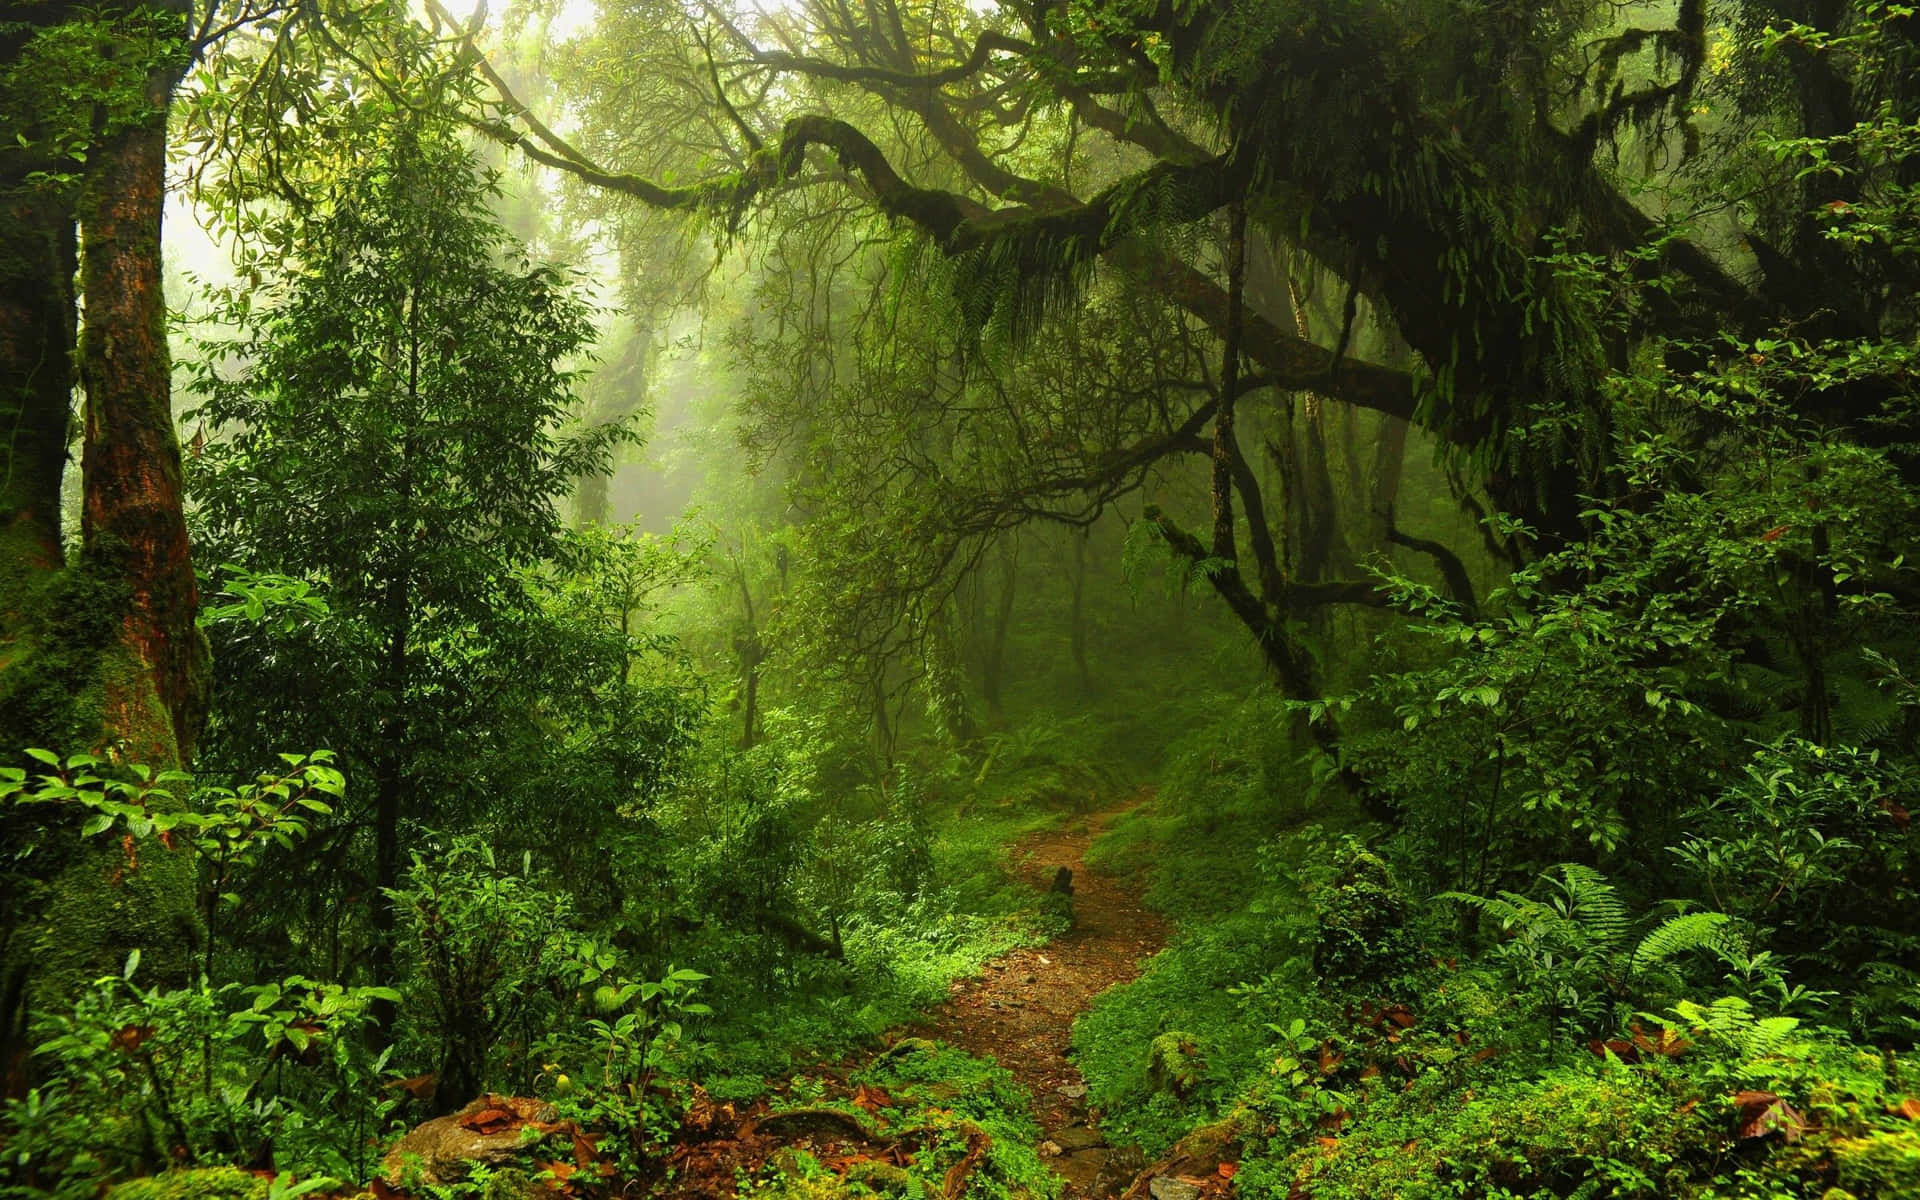 "Nature's Paradise - An Exotic Rainforest"